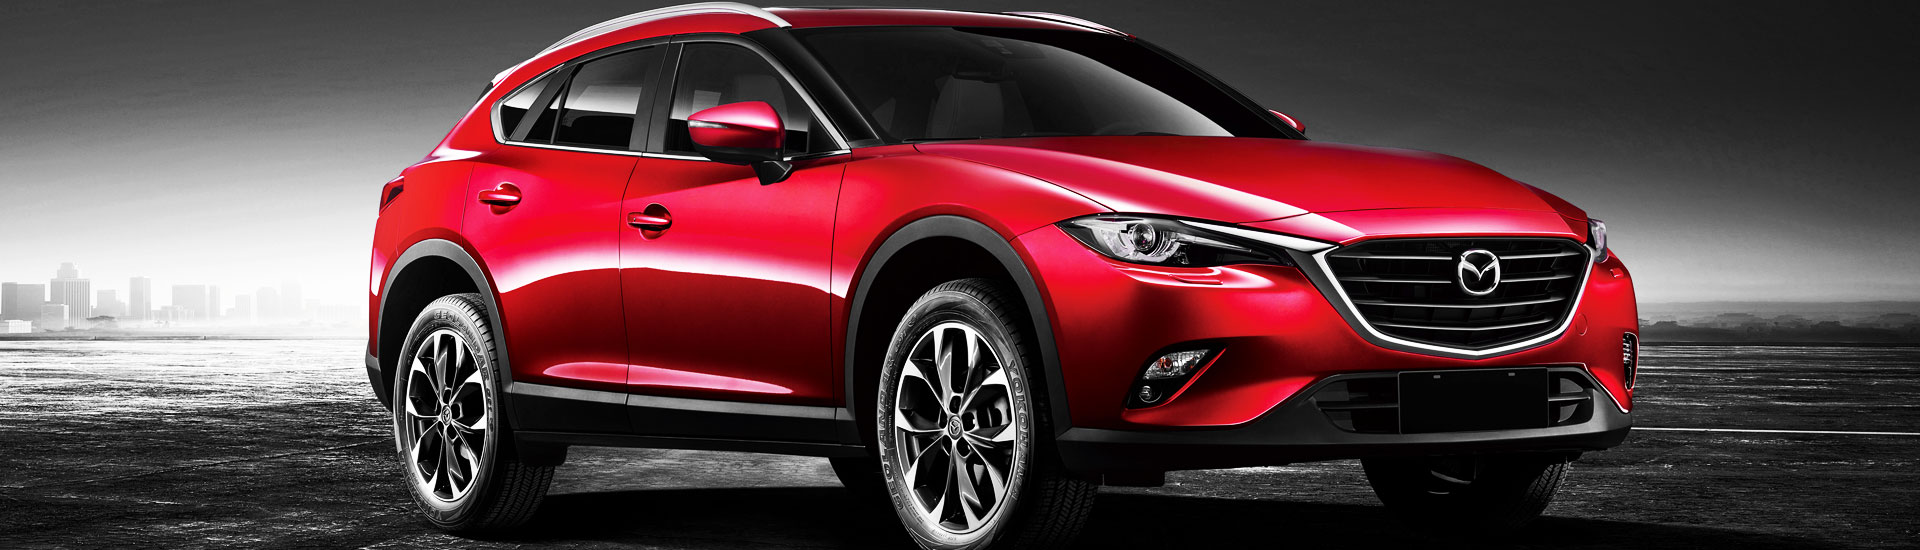 Mazda Protege Window Tint